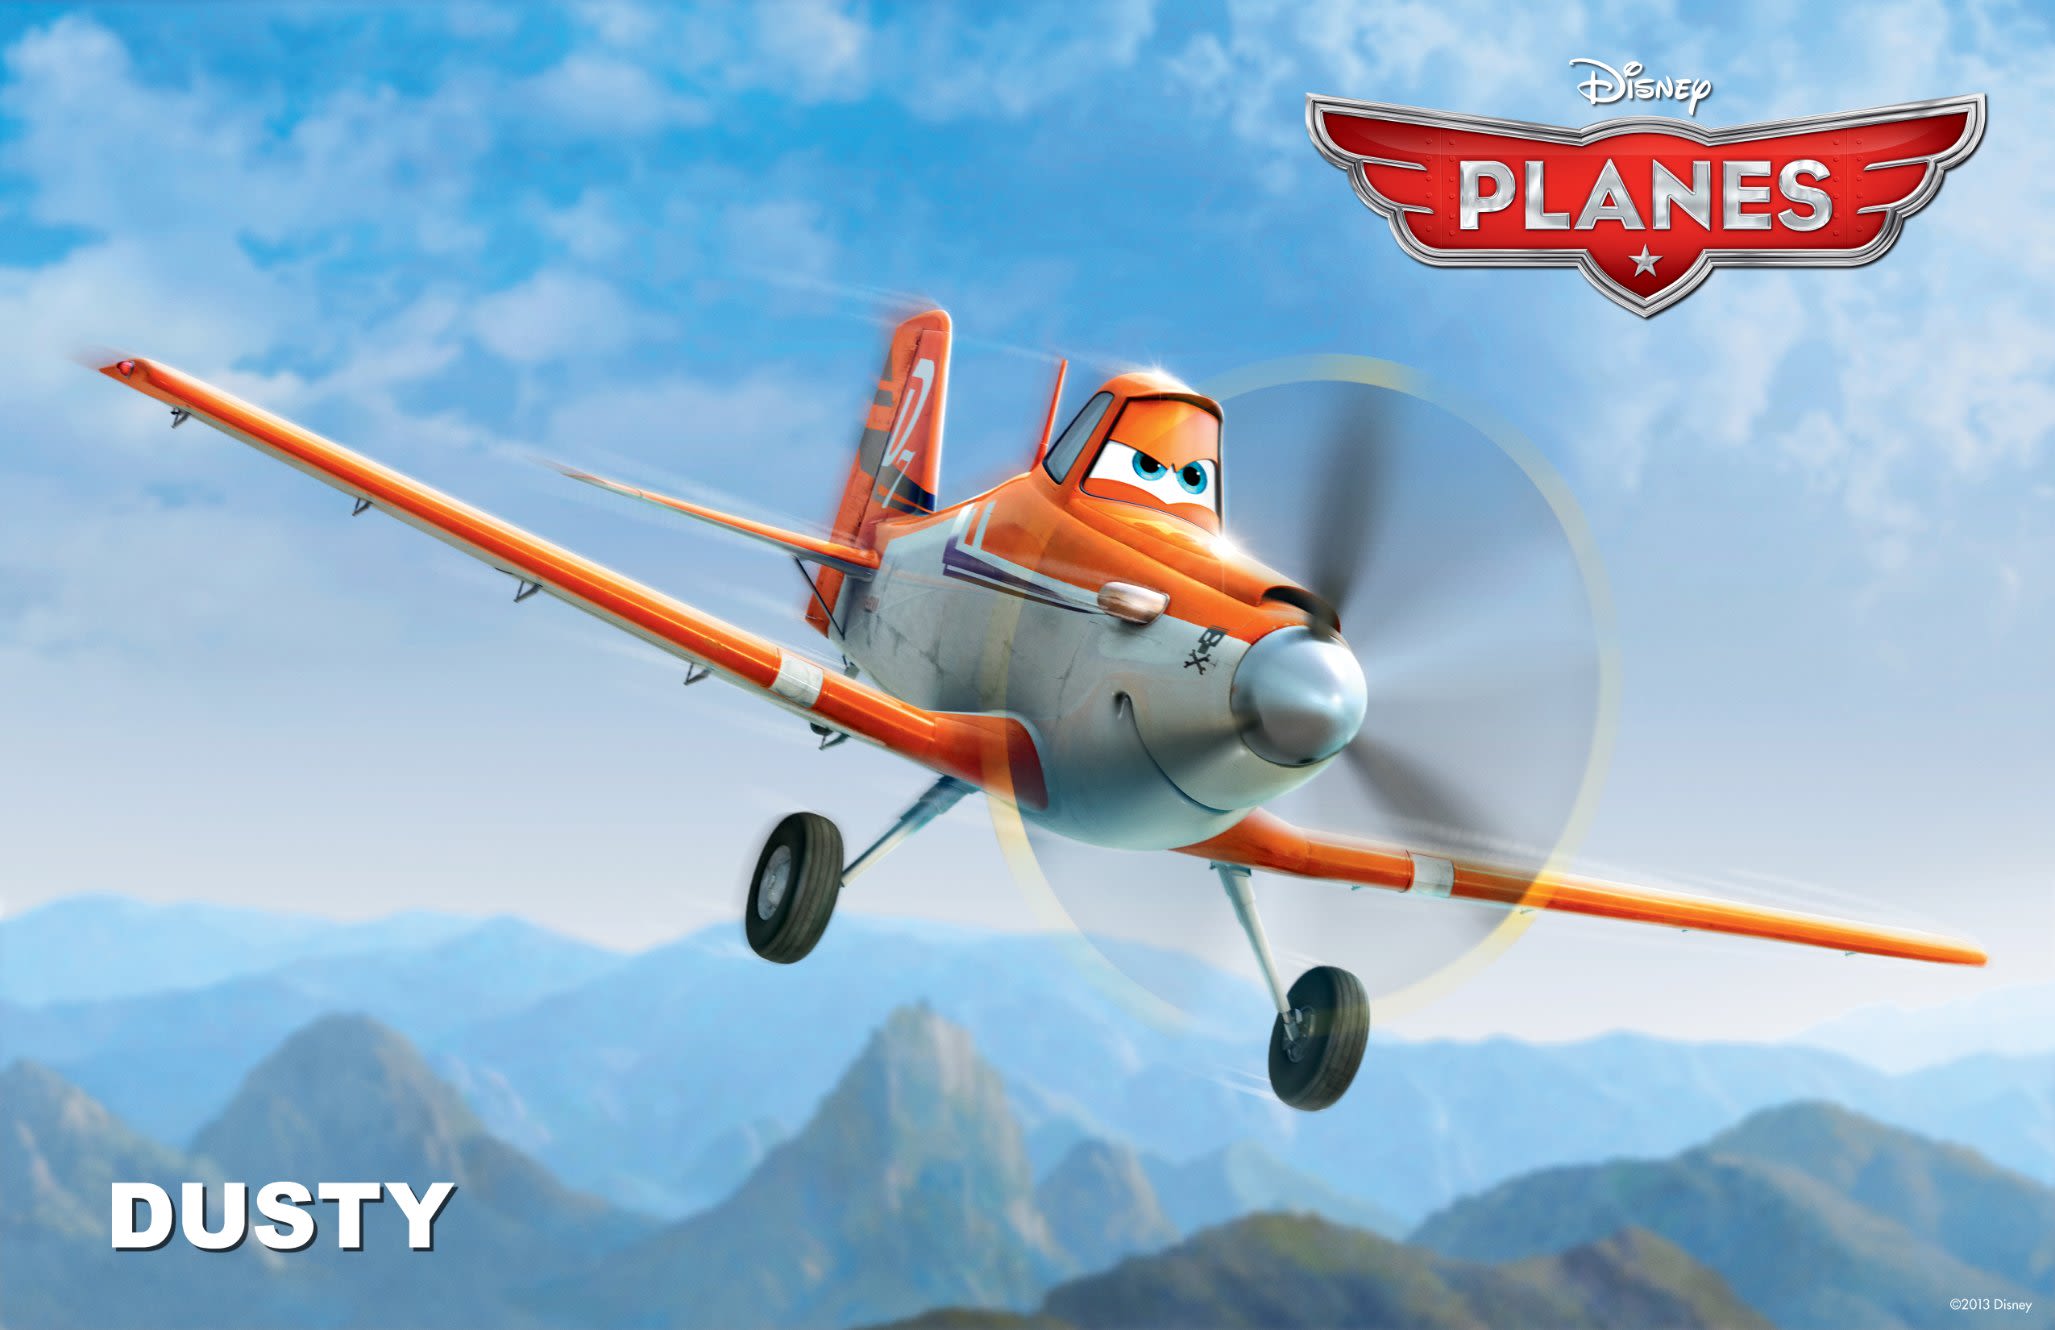 Meet the pilot who kept Disney's film 'Planes' flying right | CNN